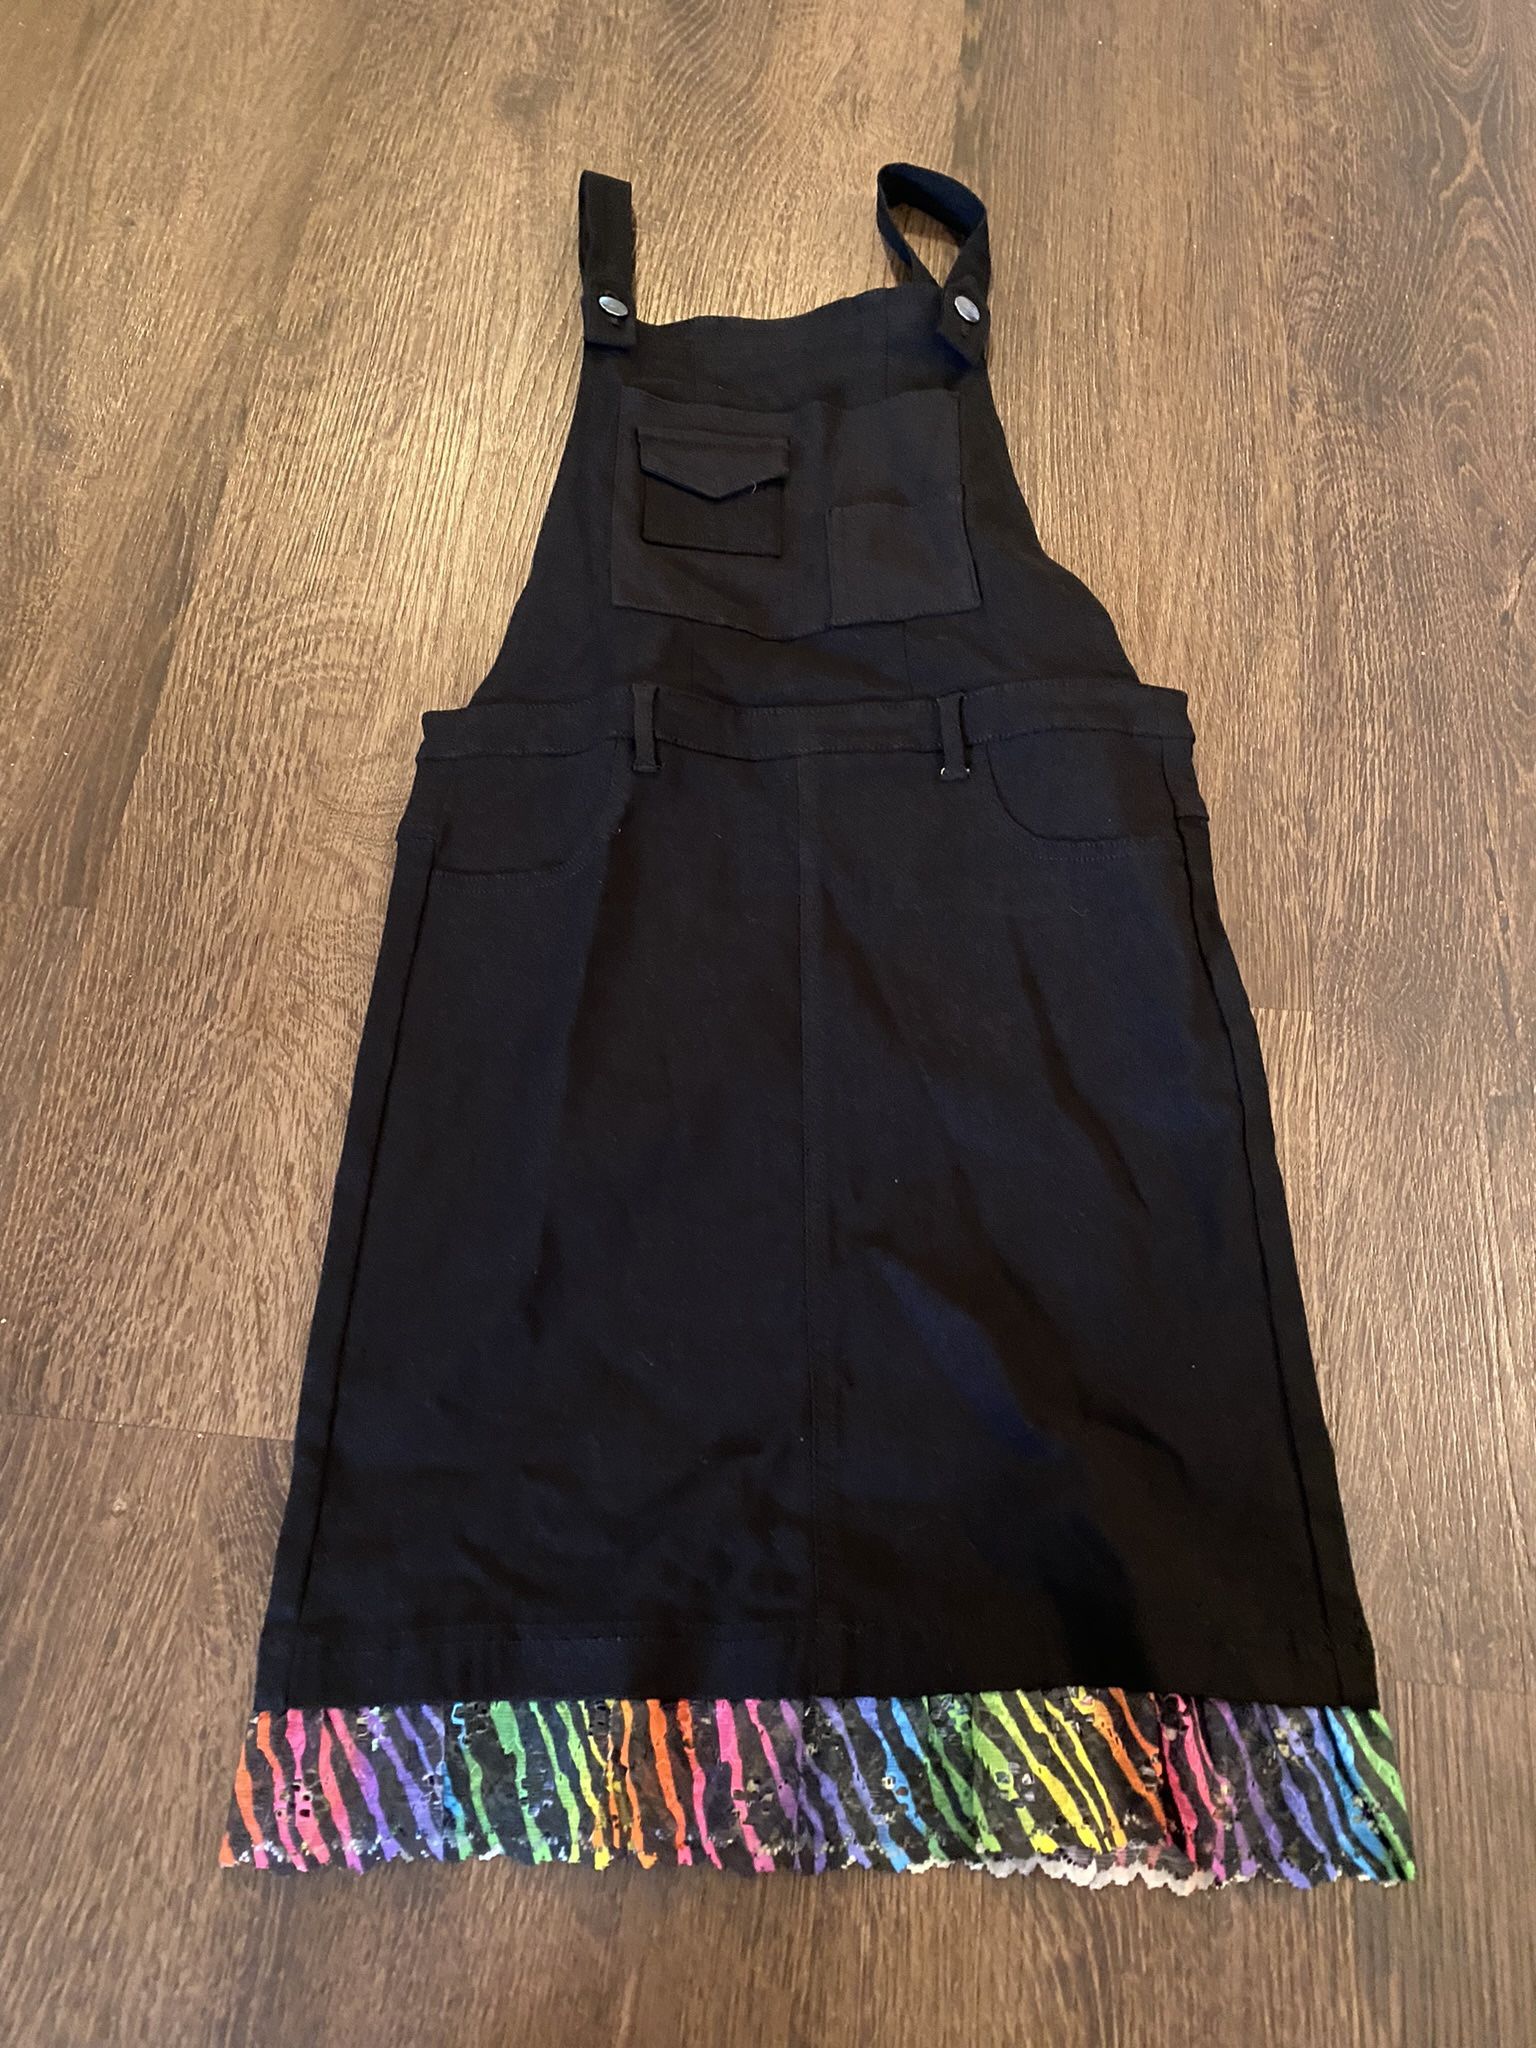 Girls Black Dress Jumper Overalls Size 10/12 #5